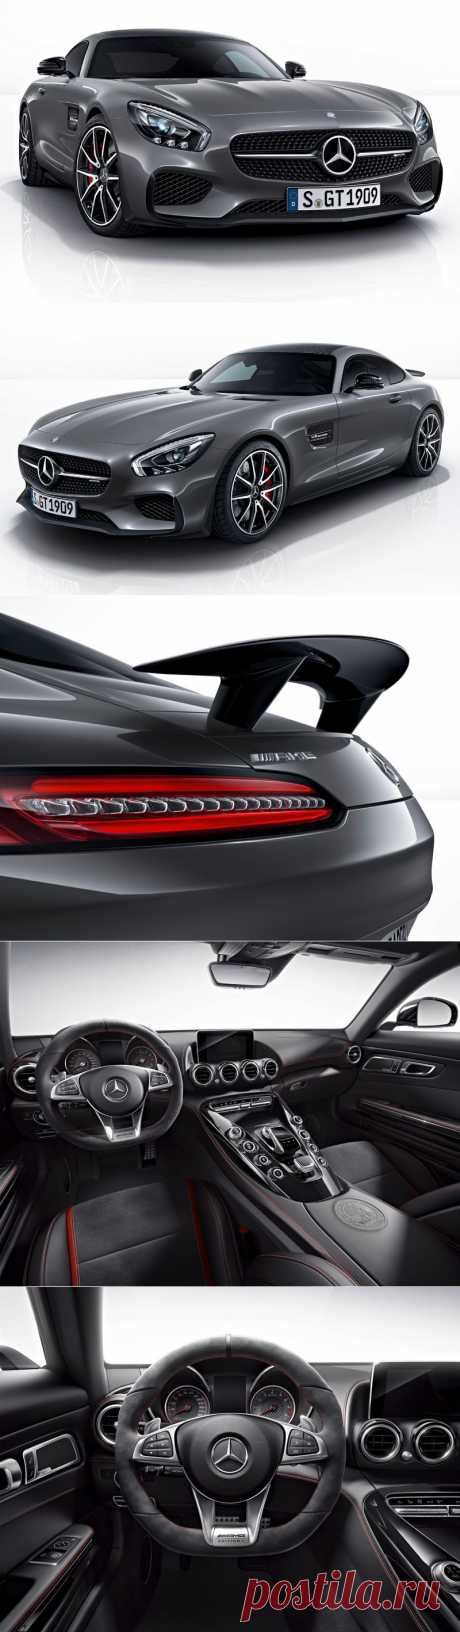 Mercedes-AMG GT S: разгон с 0 до 100 км/ч за 3,8 секунды / Новости hardware / 3DNews - Daily Digital Digest